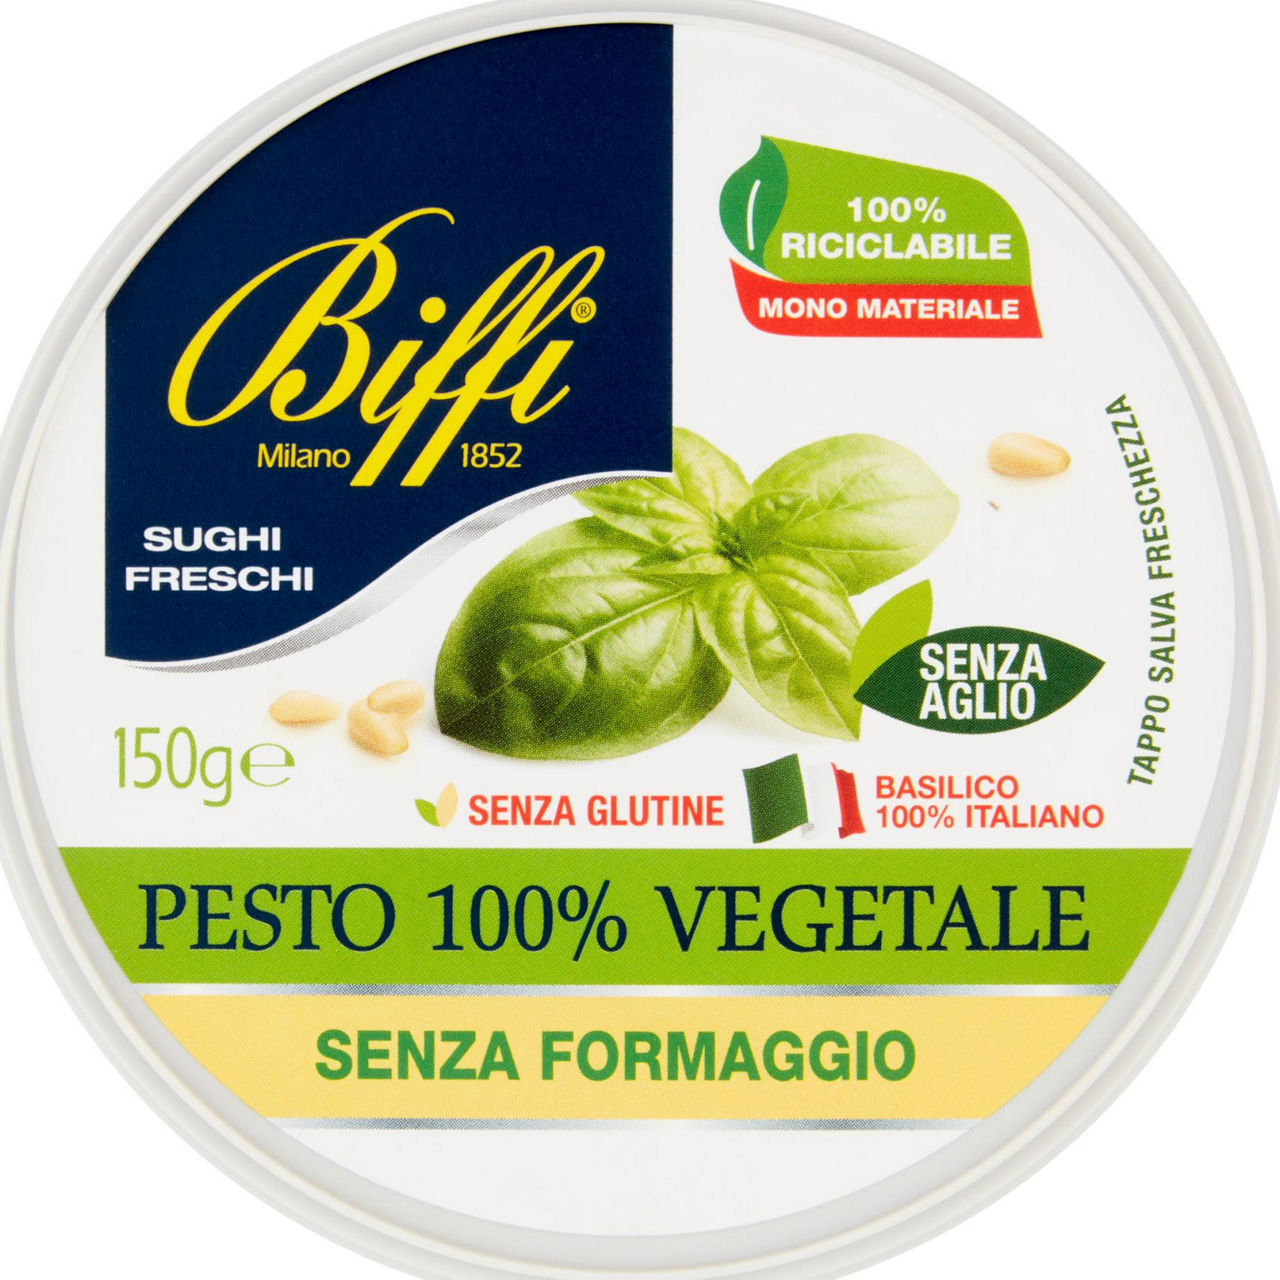 Pesto senza formaggio 100% vegetale fresco biffi g 150